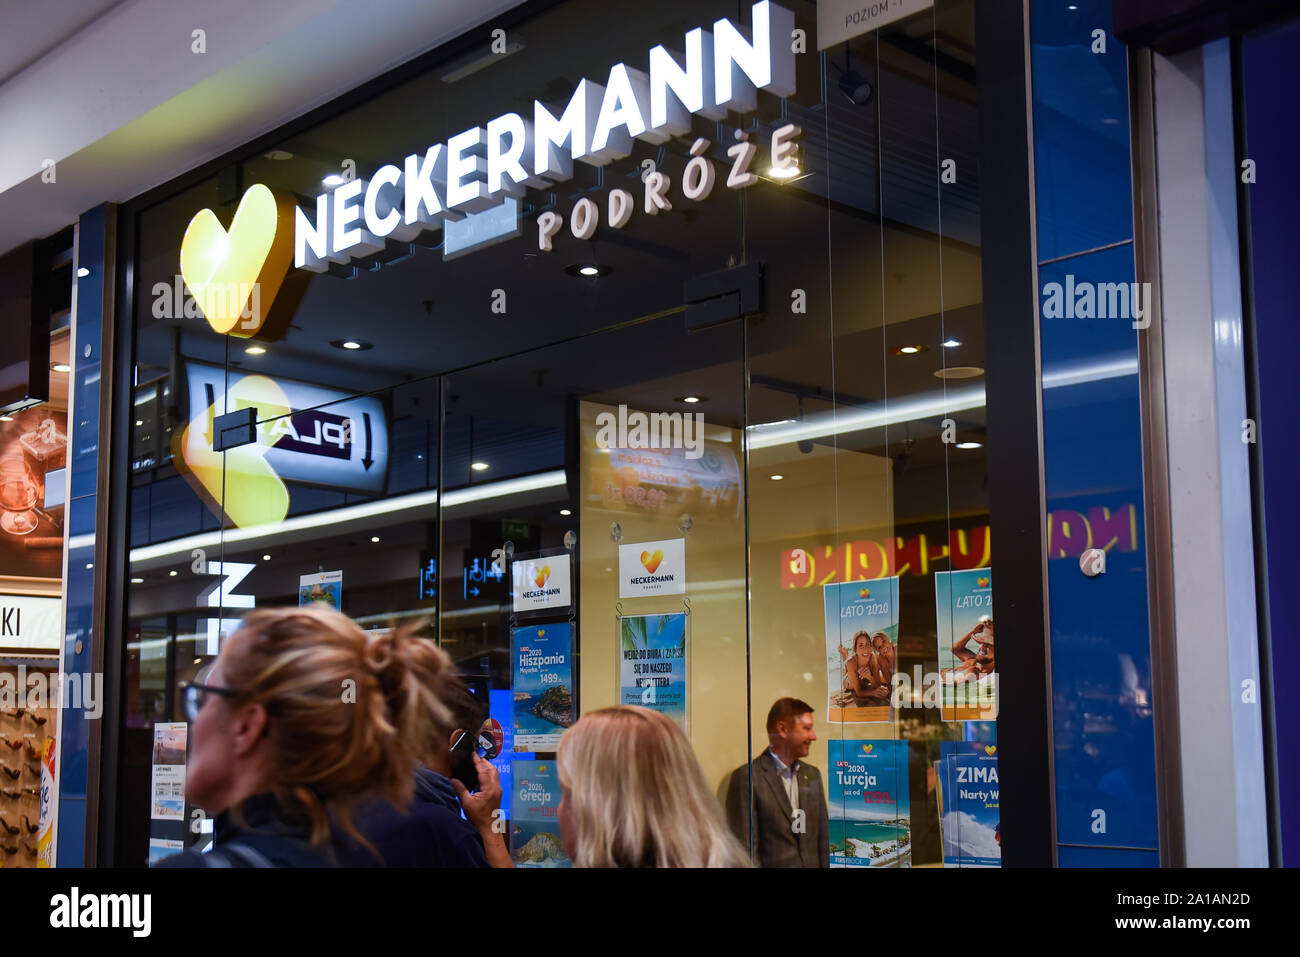 raken Cataract einde Neckermann High Resolution Stock Photography and Images - Alamy